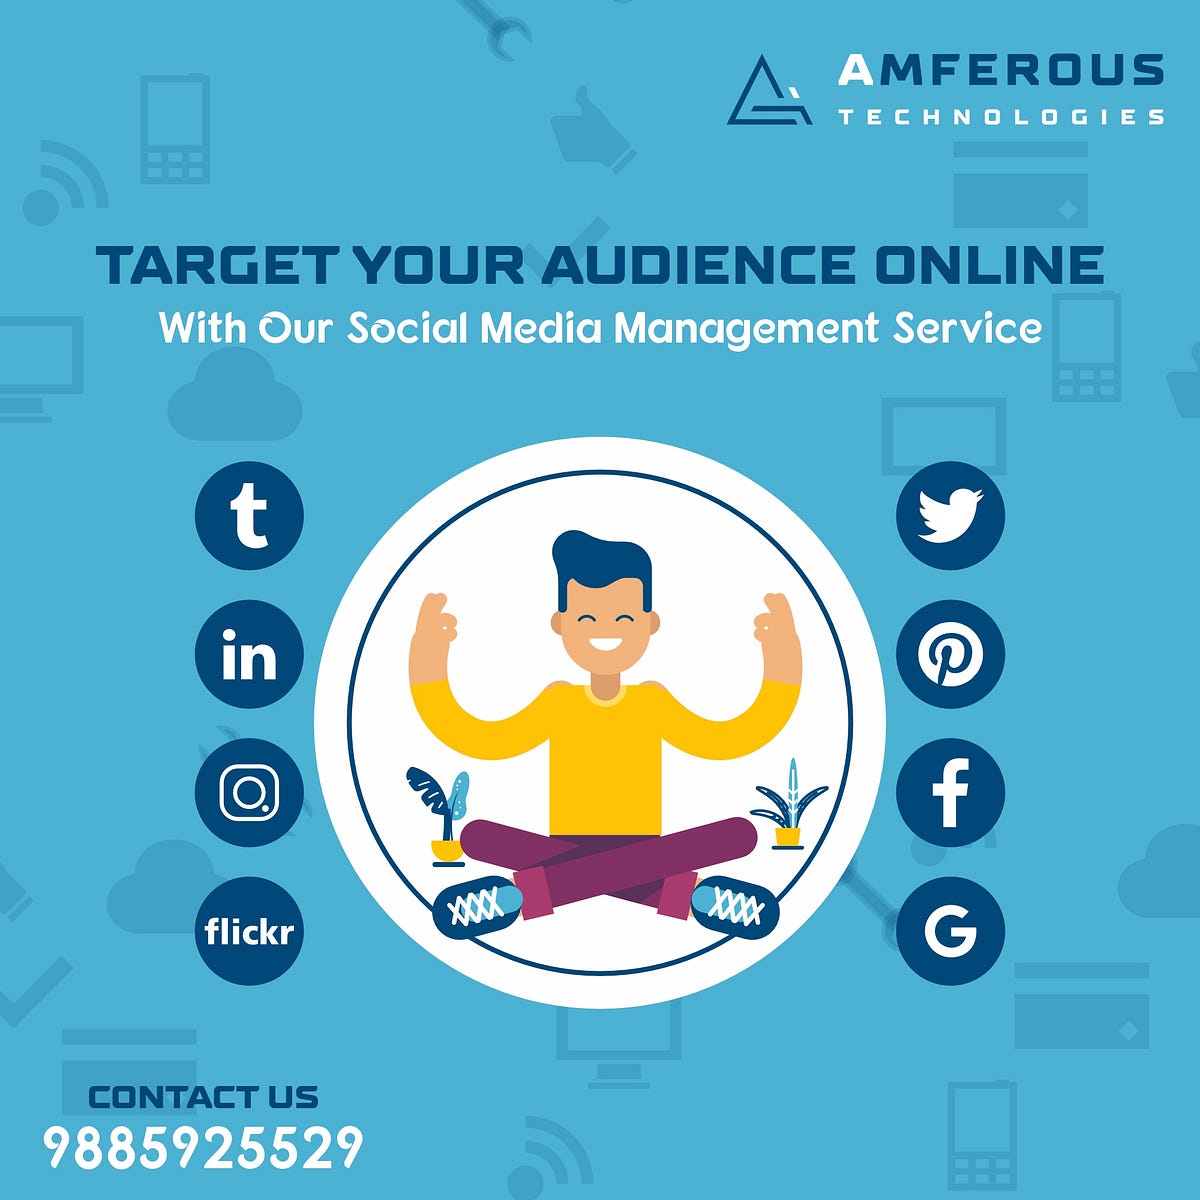 Social Media Management Service - Amferous Technologies